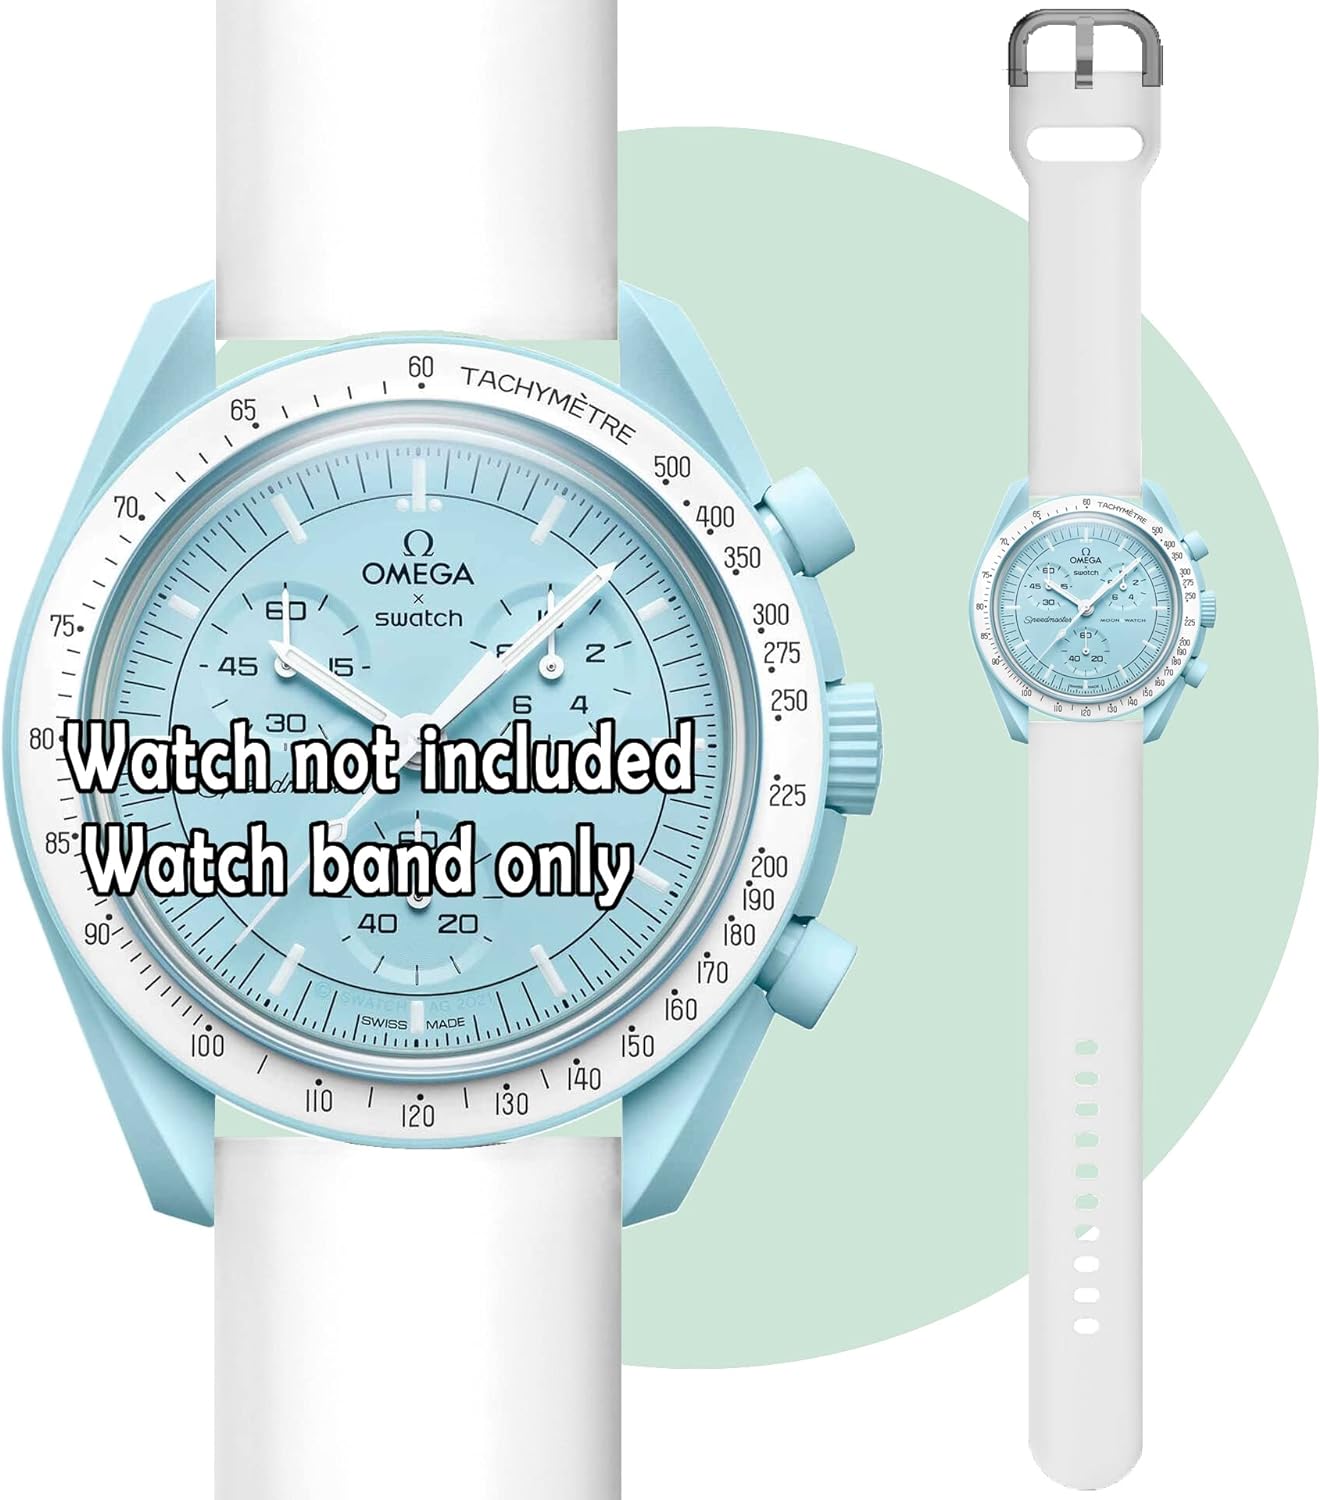 [Ocdin] 20mm 腕時計バンド Omega X Swatch オメガとスウォッチ スピードマスター ムーンスウォッチ用 シリコンベルト簡単交換 男性と女性兼用 腕時計ストラップ (白)